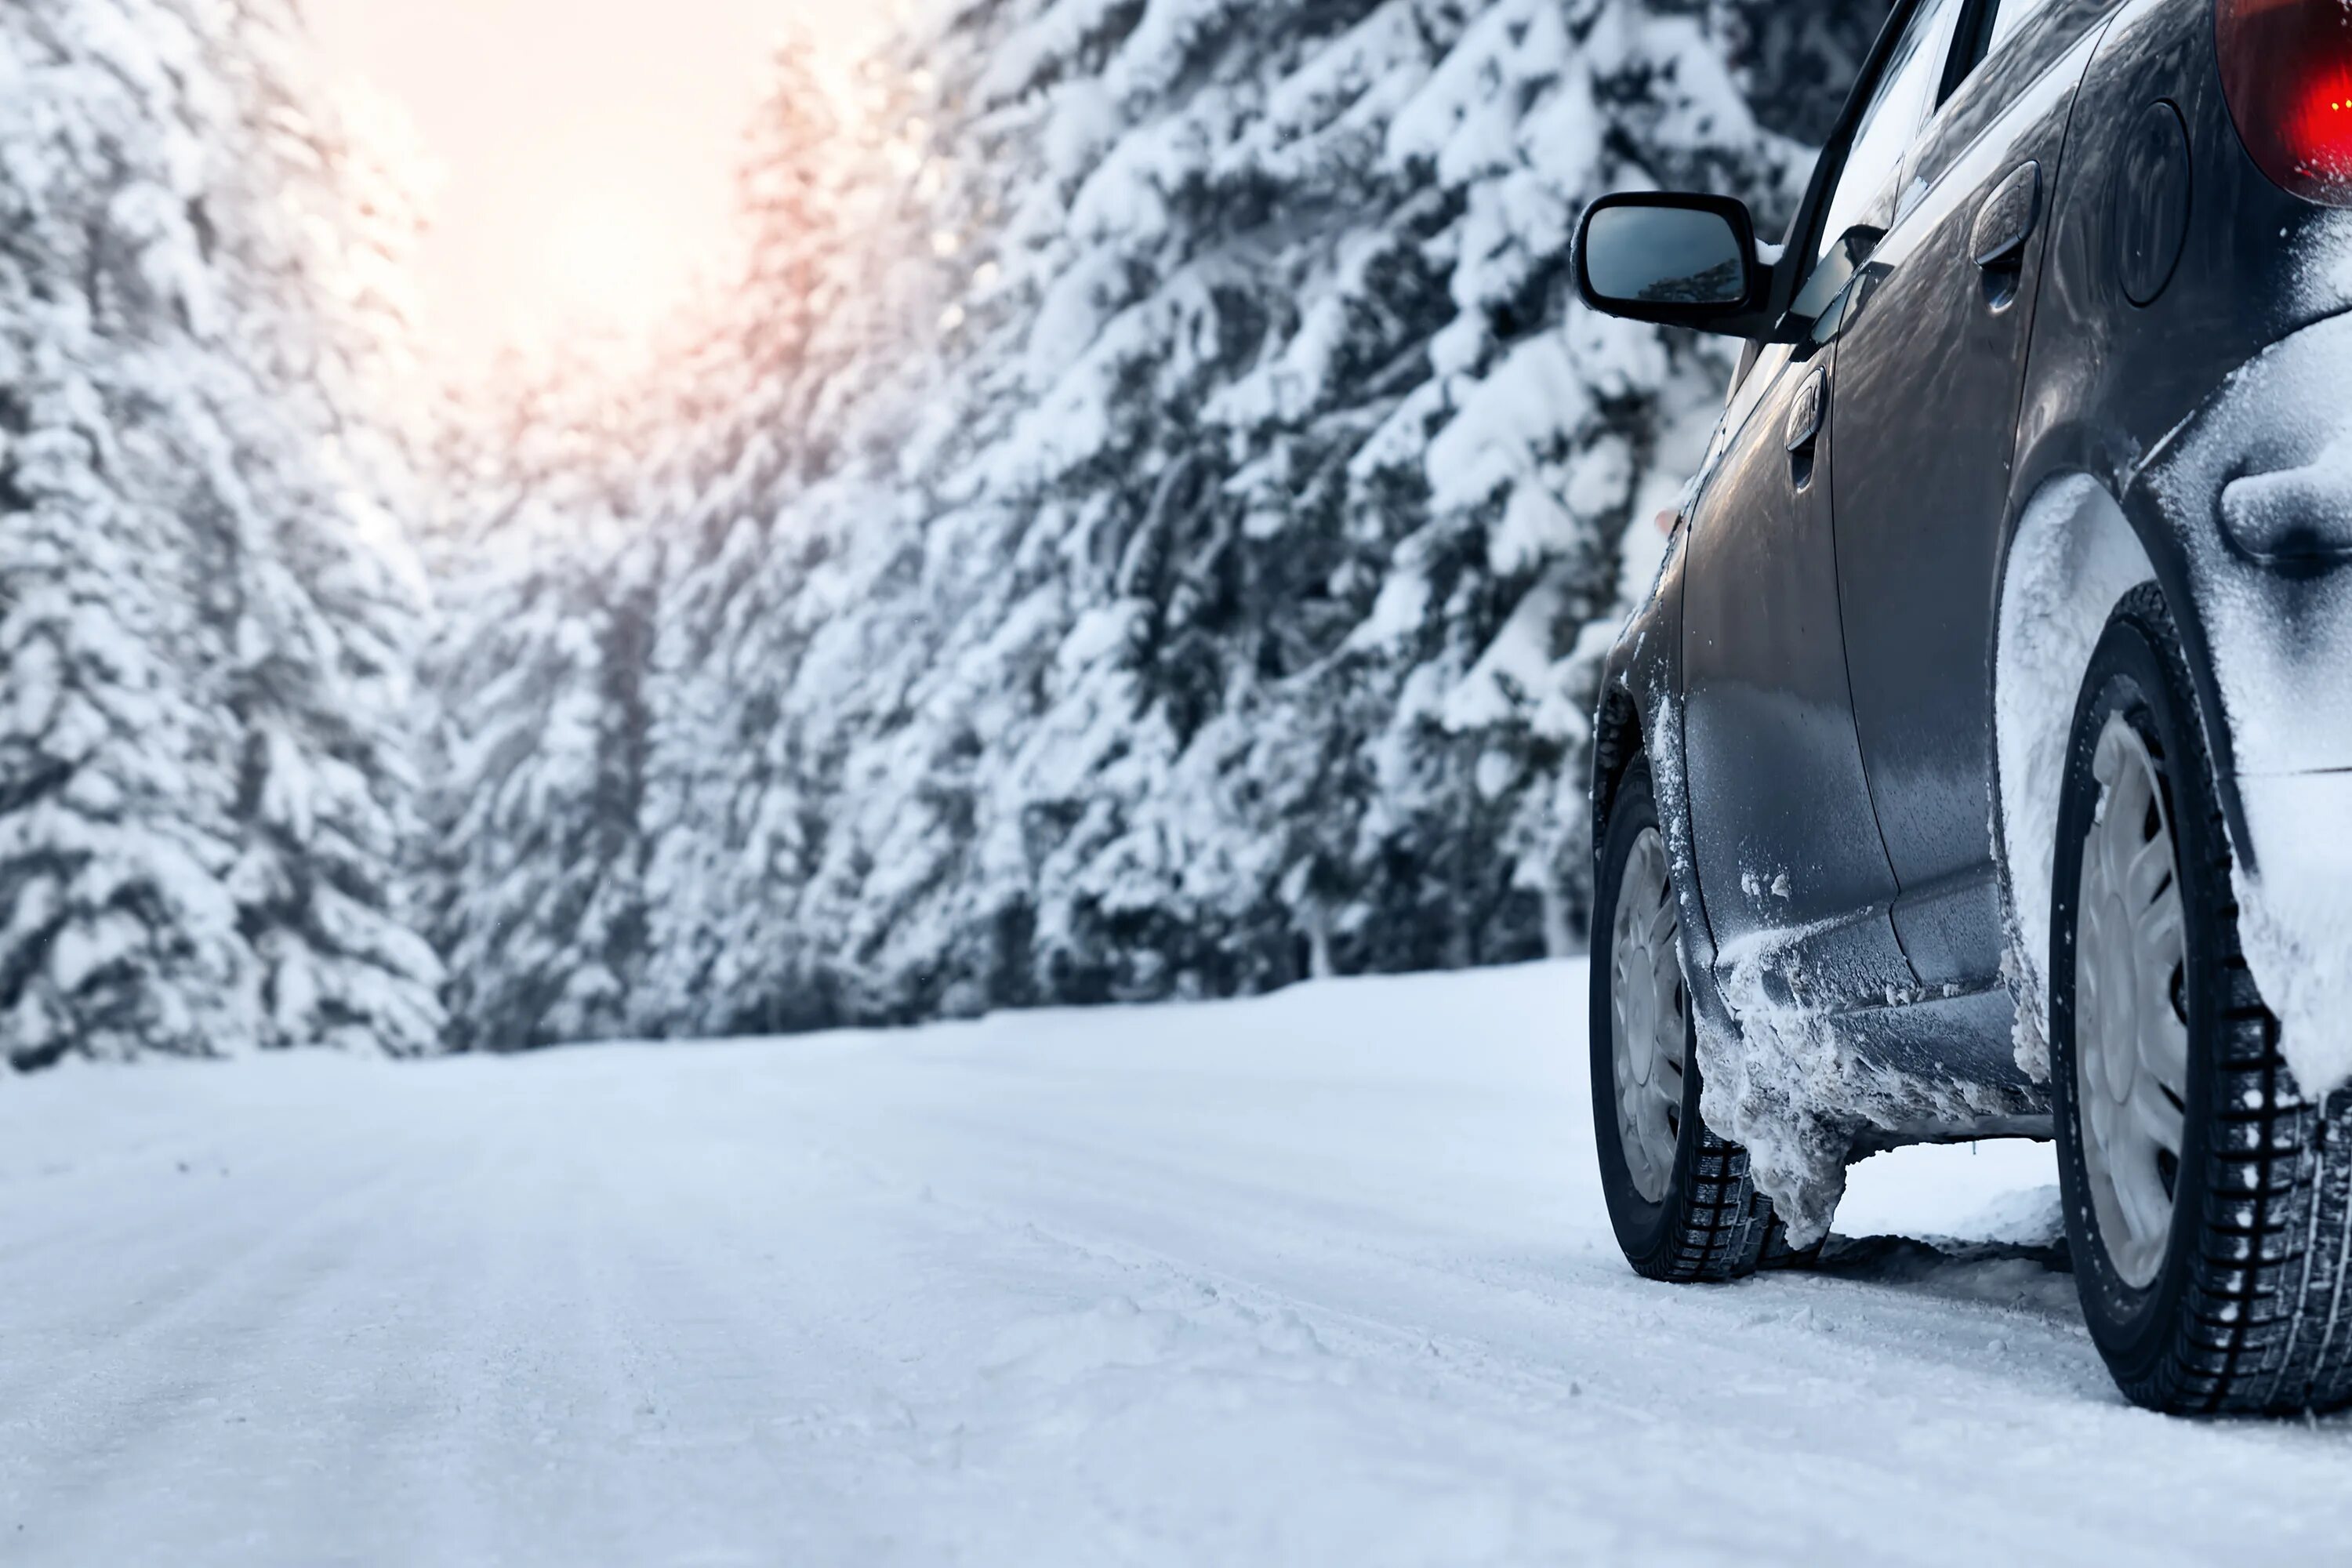 Машина снежка. Машина зима. Машина зимой. Машина в снегу. Зима дорога машина.